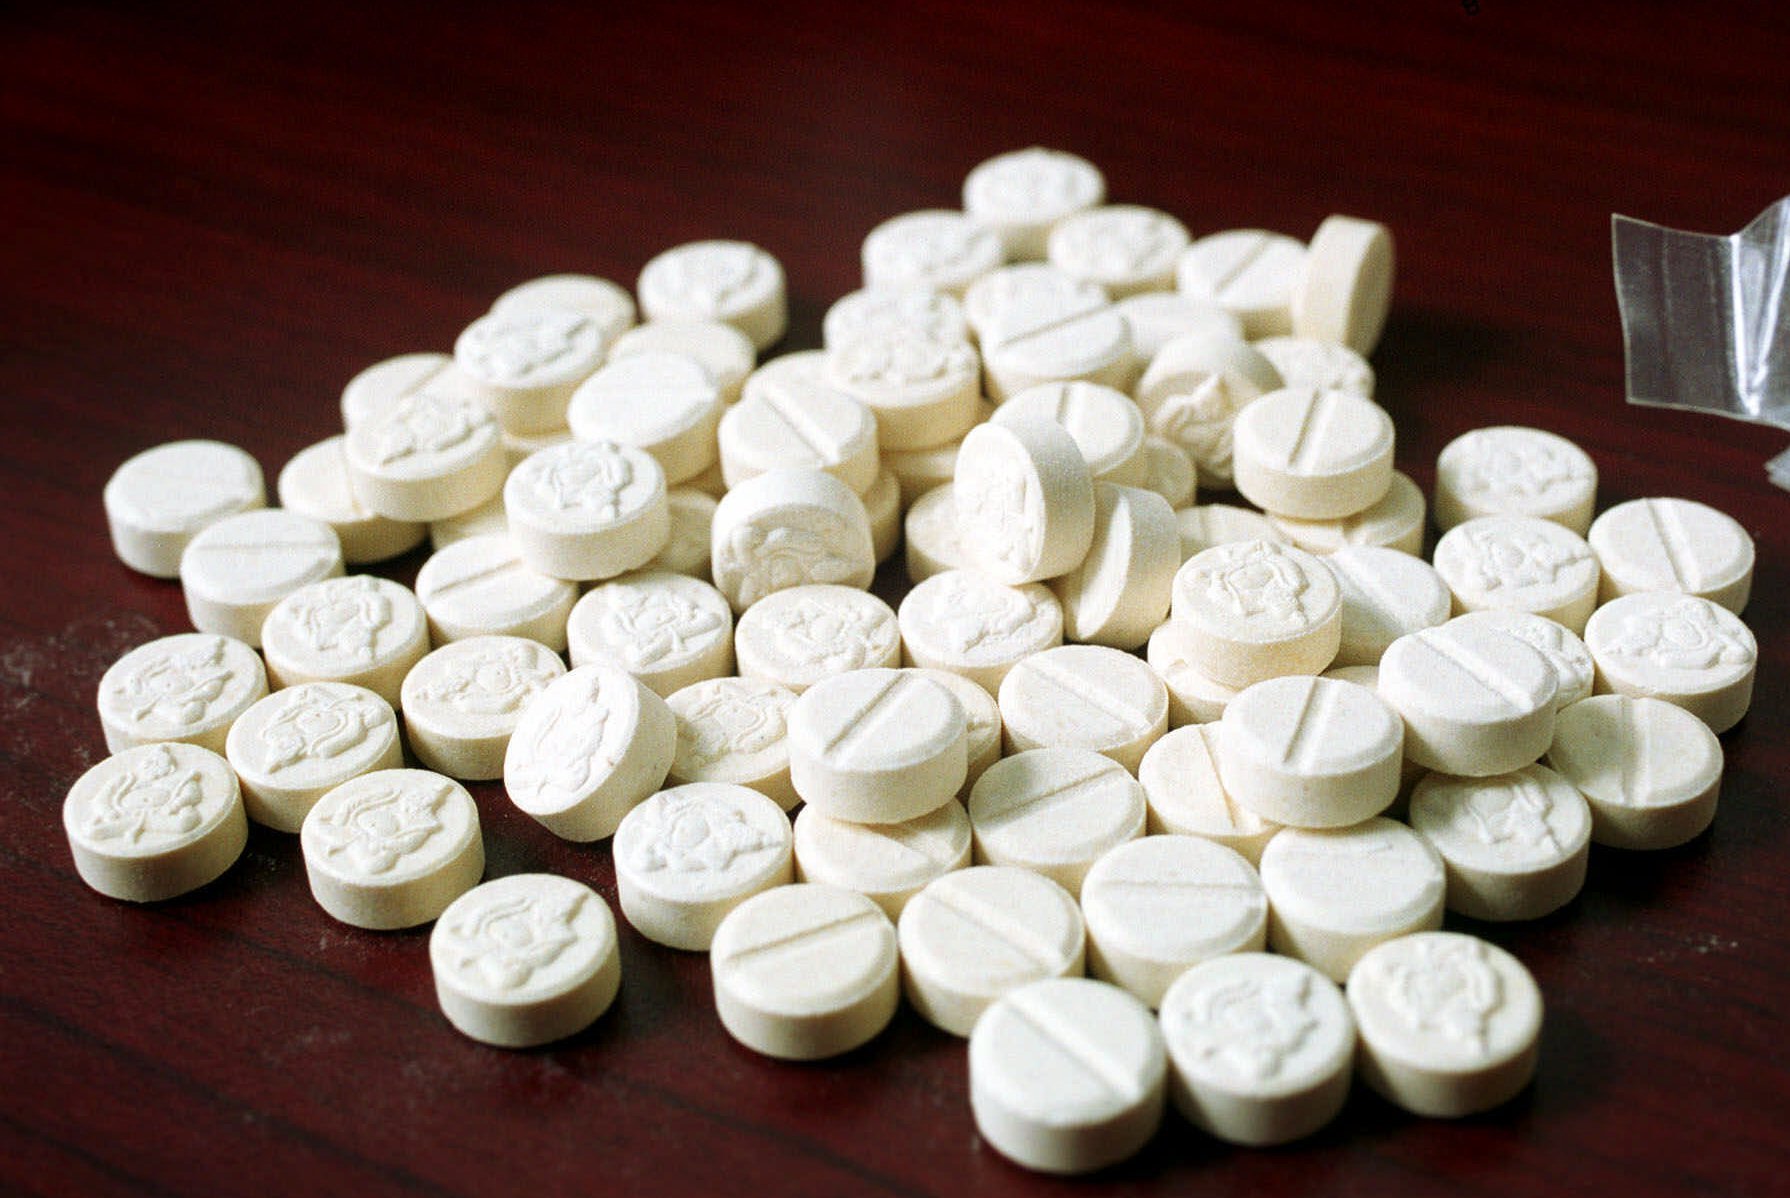 Ecstasy e novas drogas preocupam autoridades na Europa  